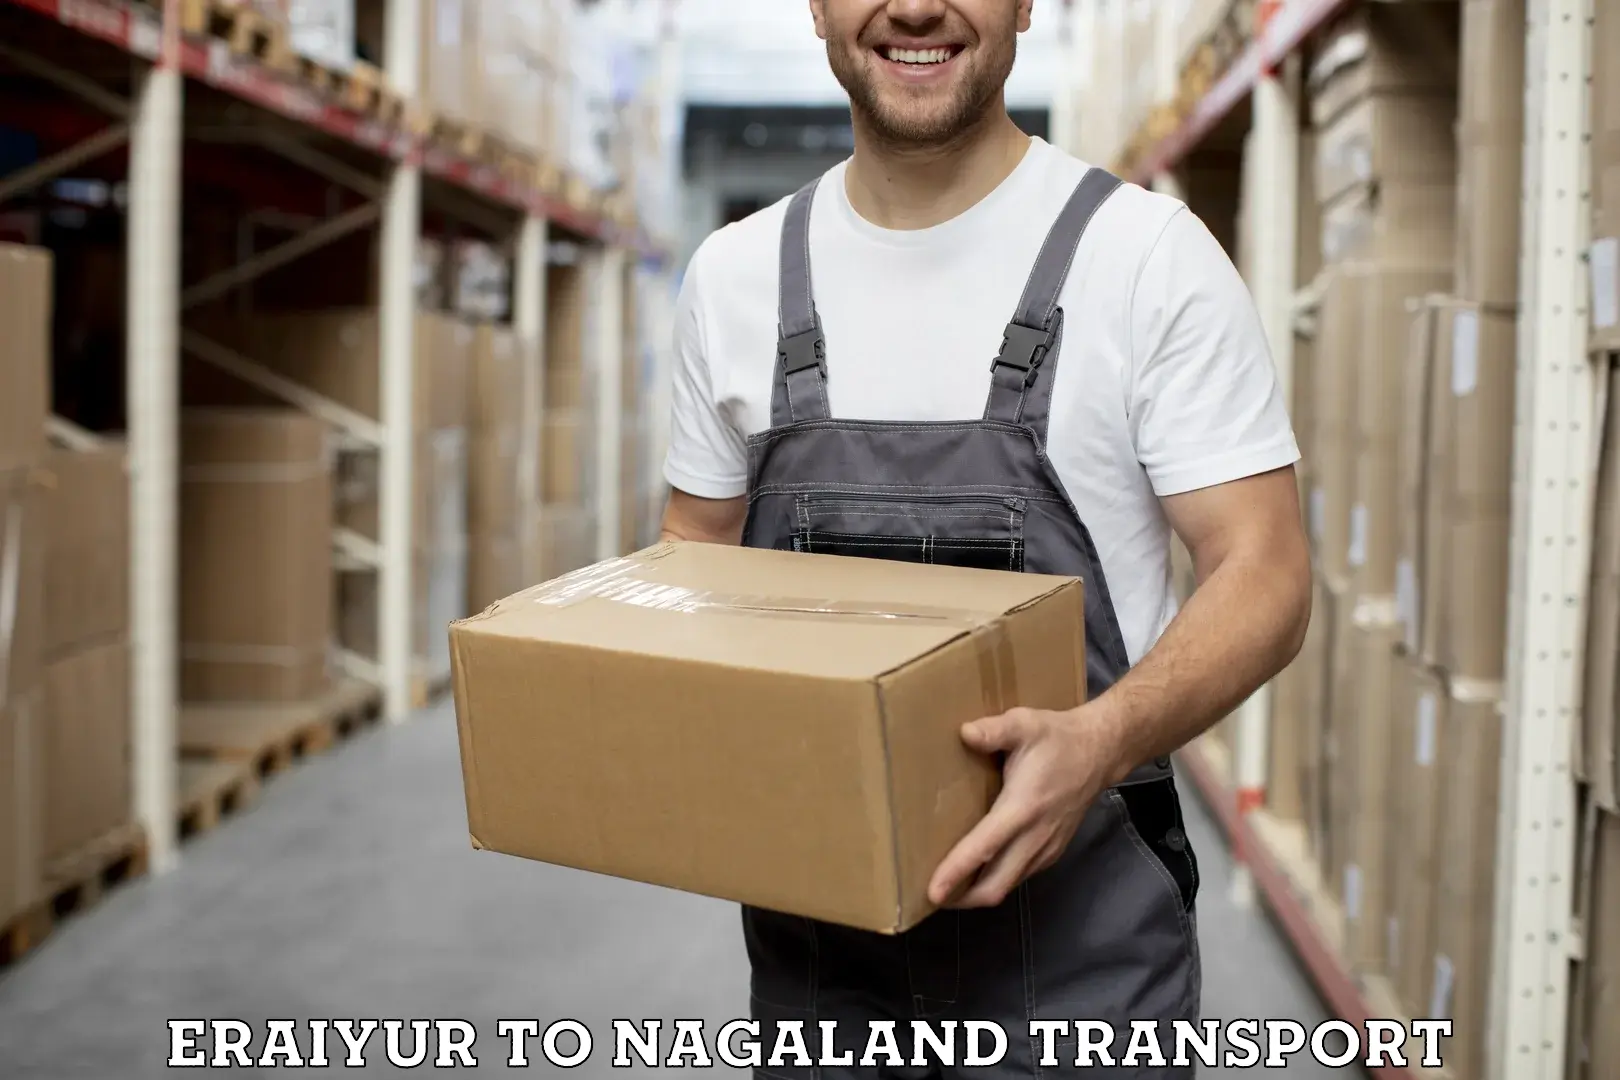 Commercial transport service Eraiyur to Nagaland